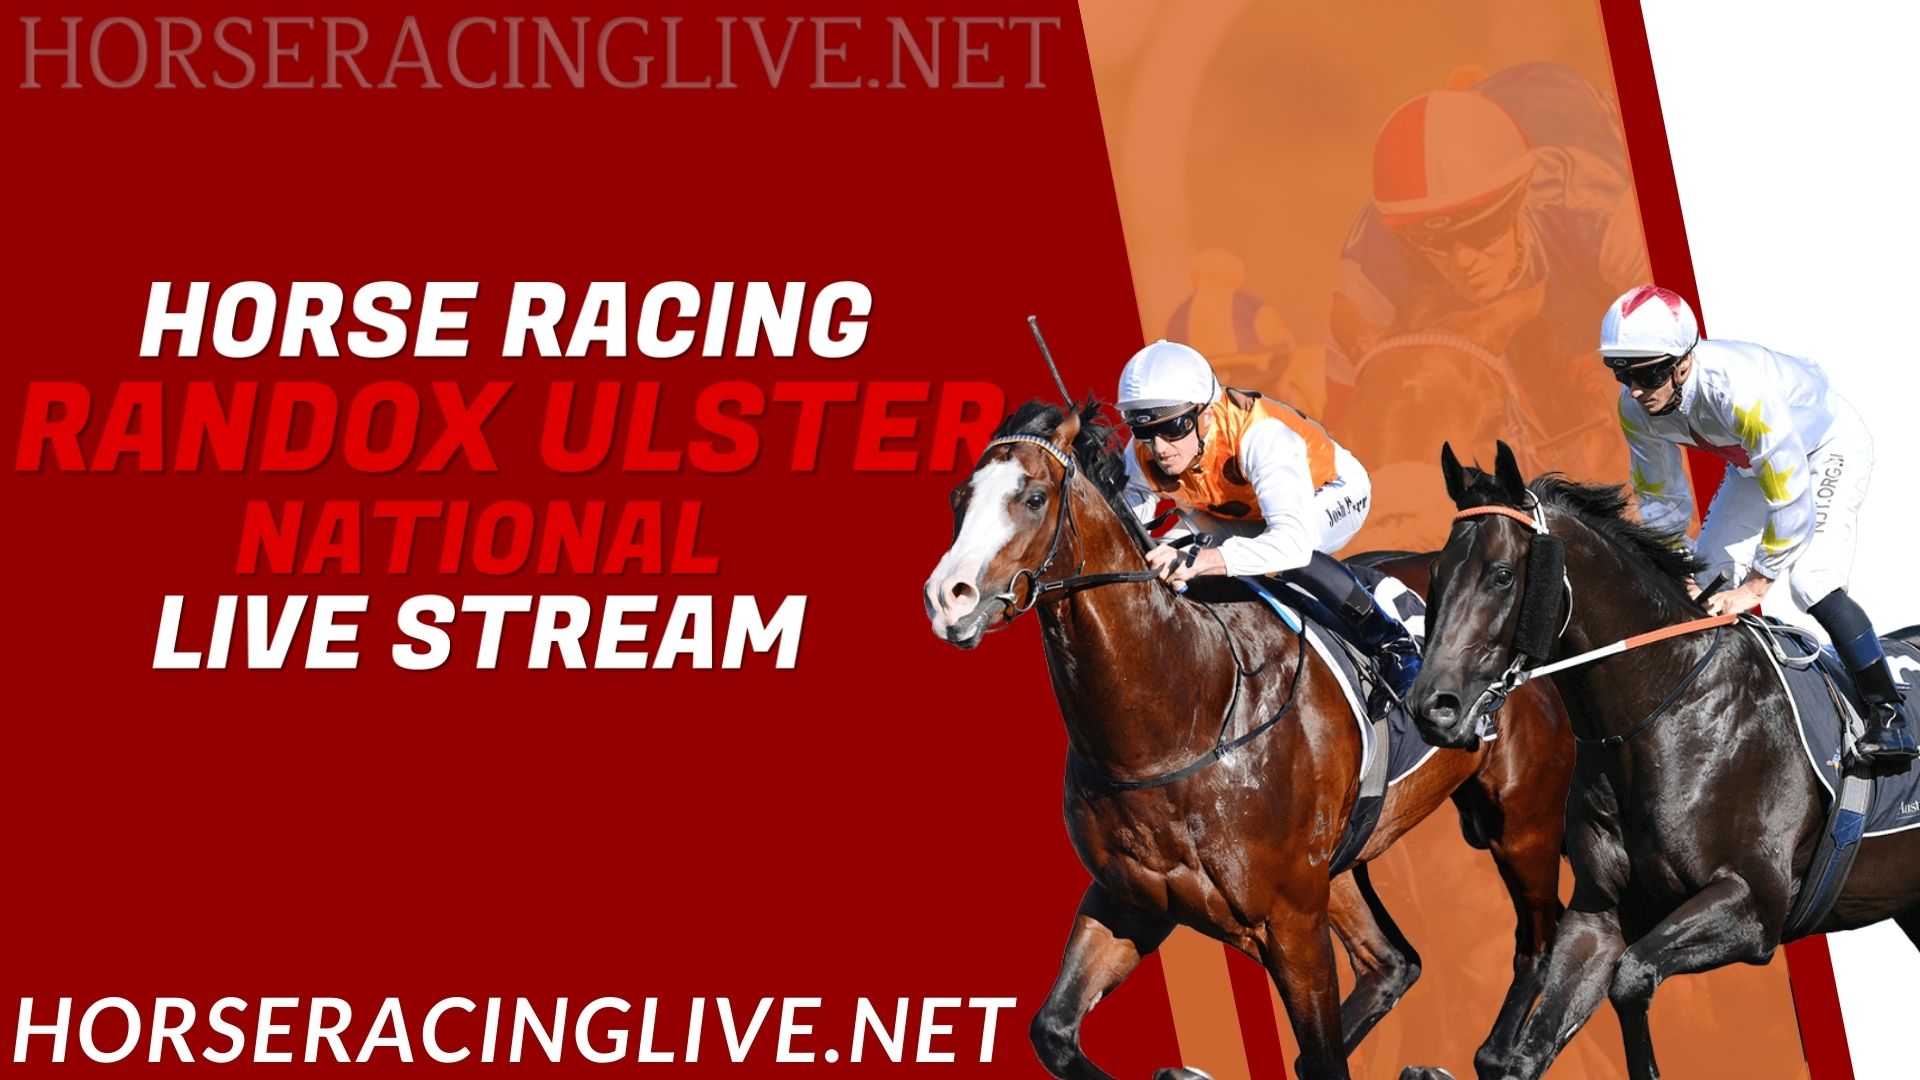 Randox Ulster National Horse Racing Live Stream